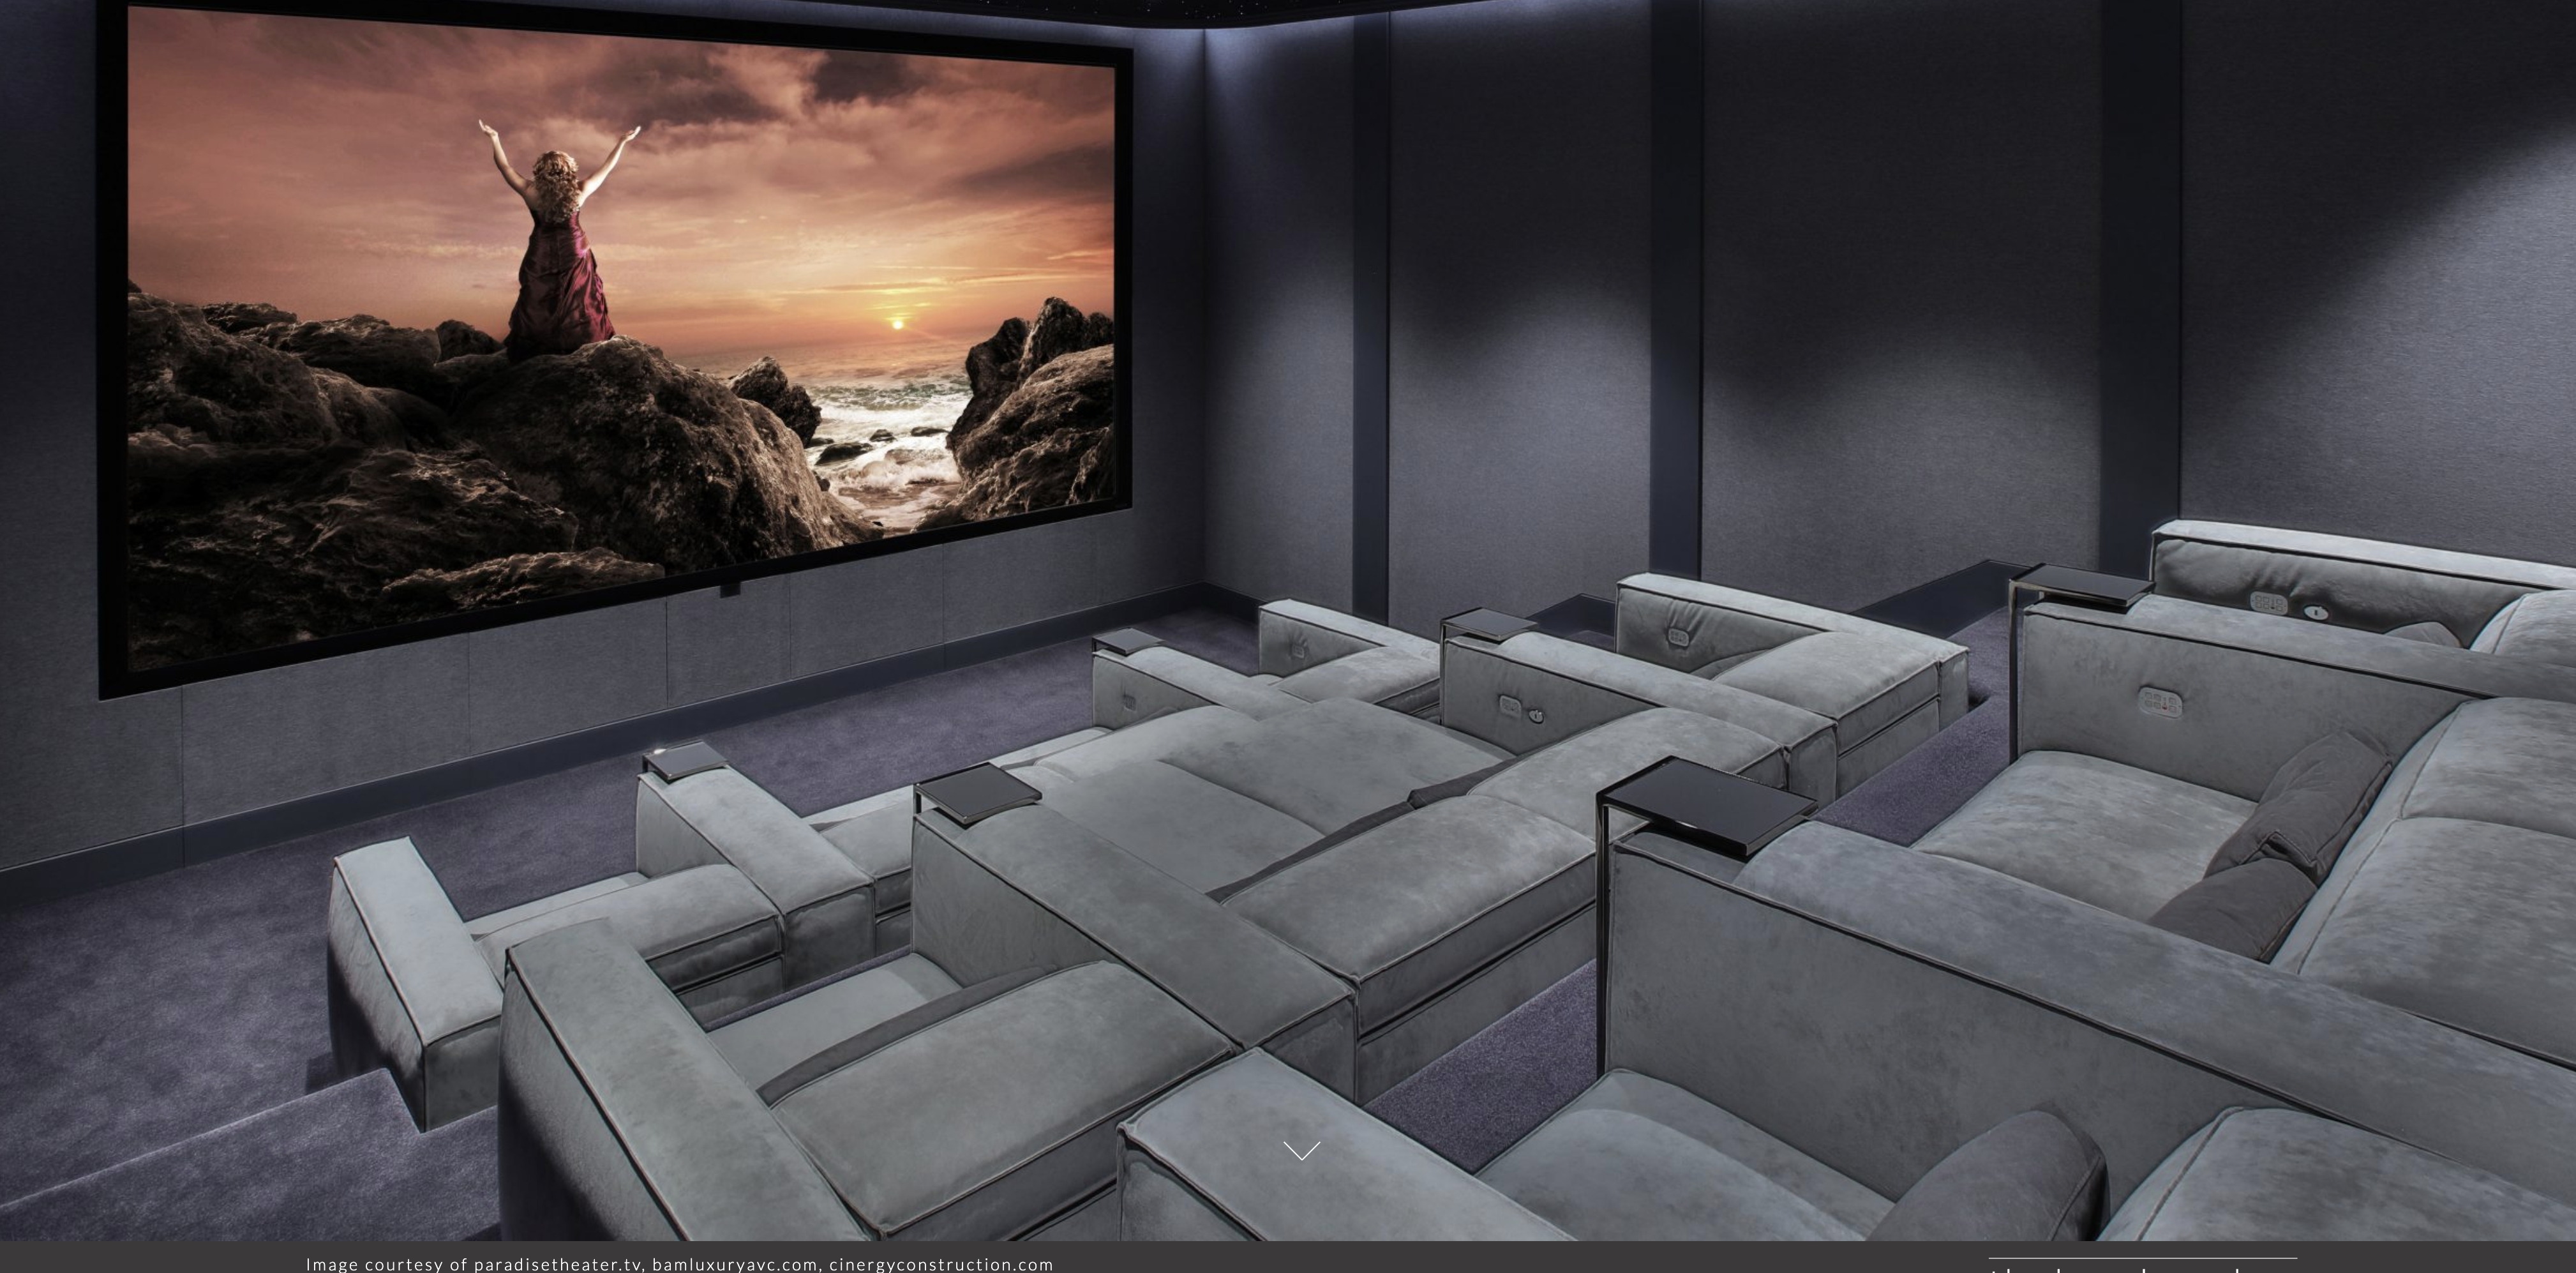 CINEAK luxury seating - Home Theater & Media Room Furniture